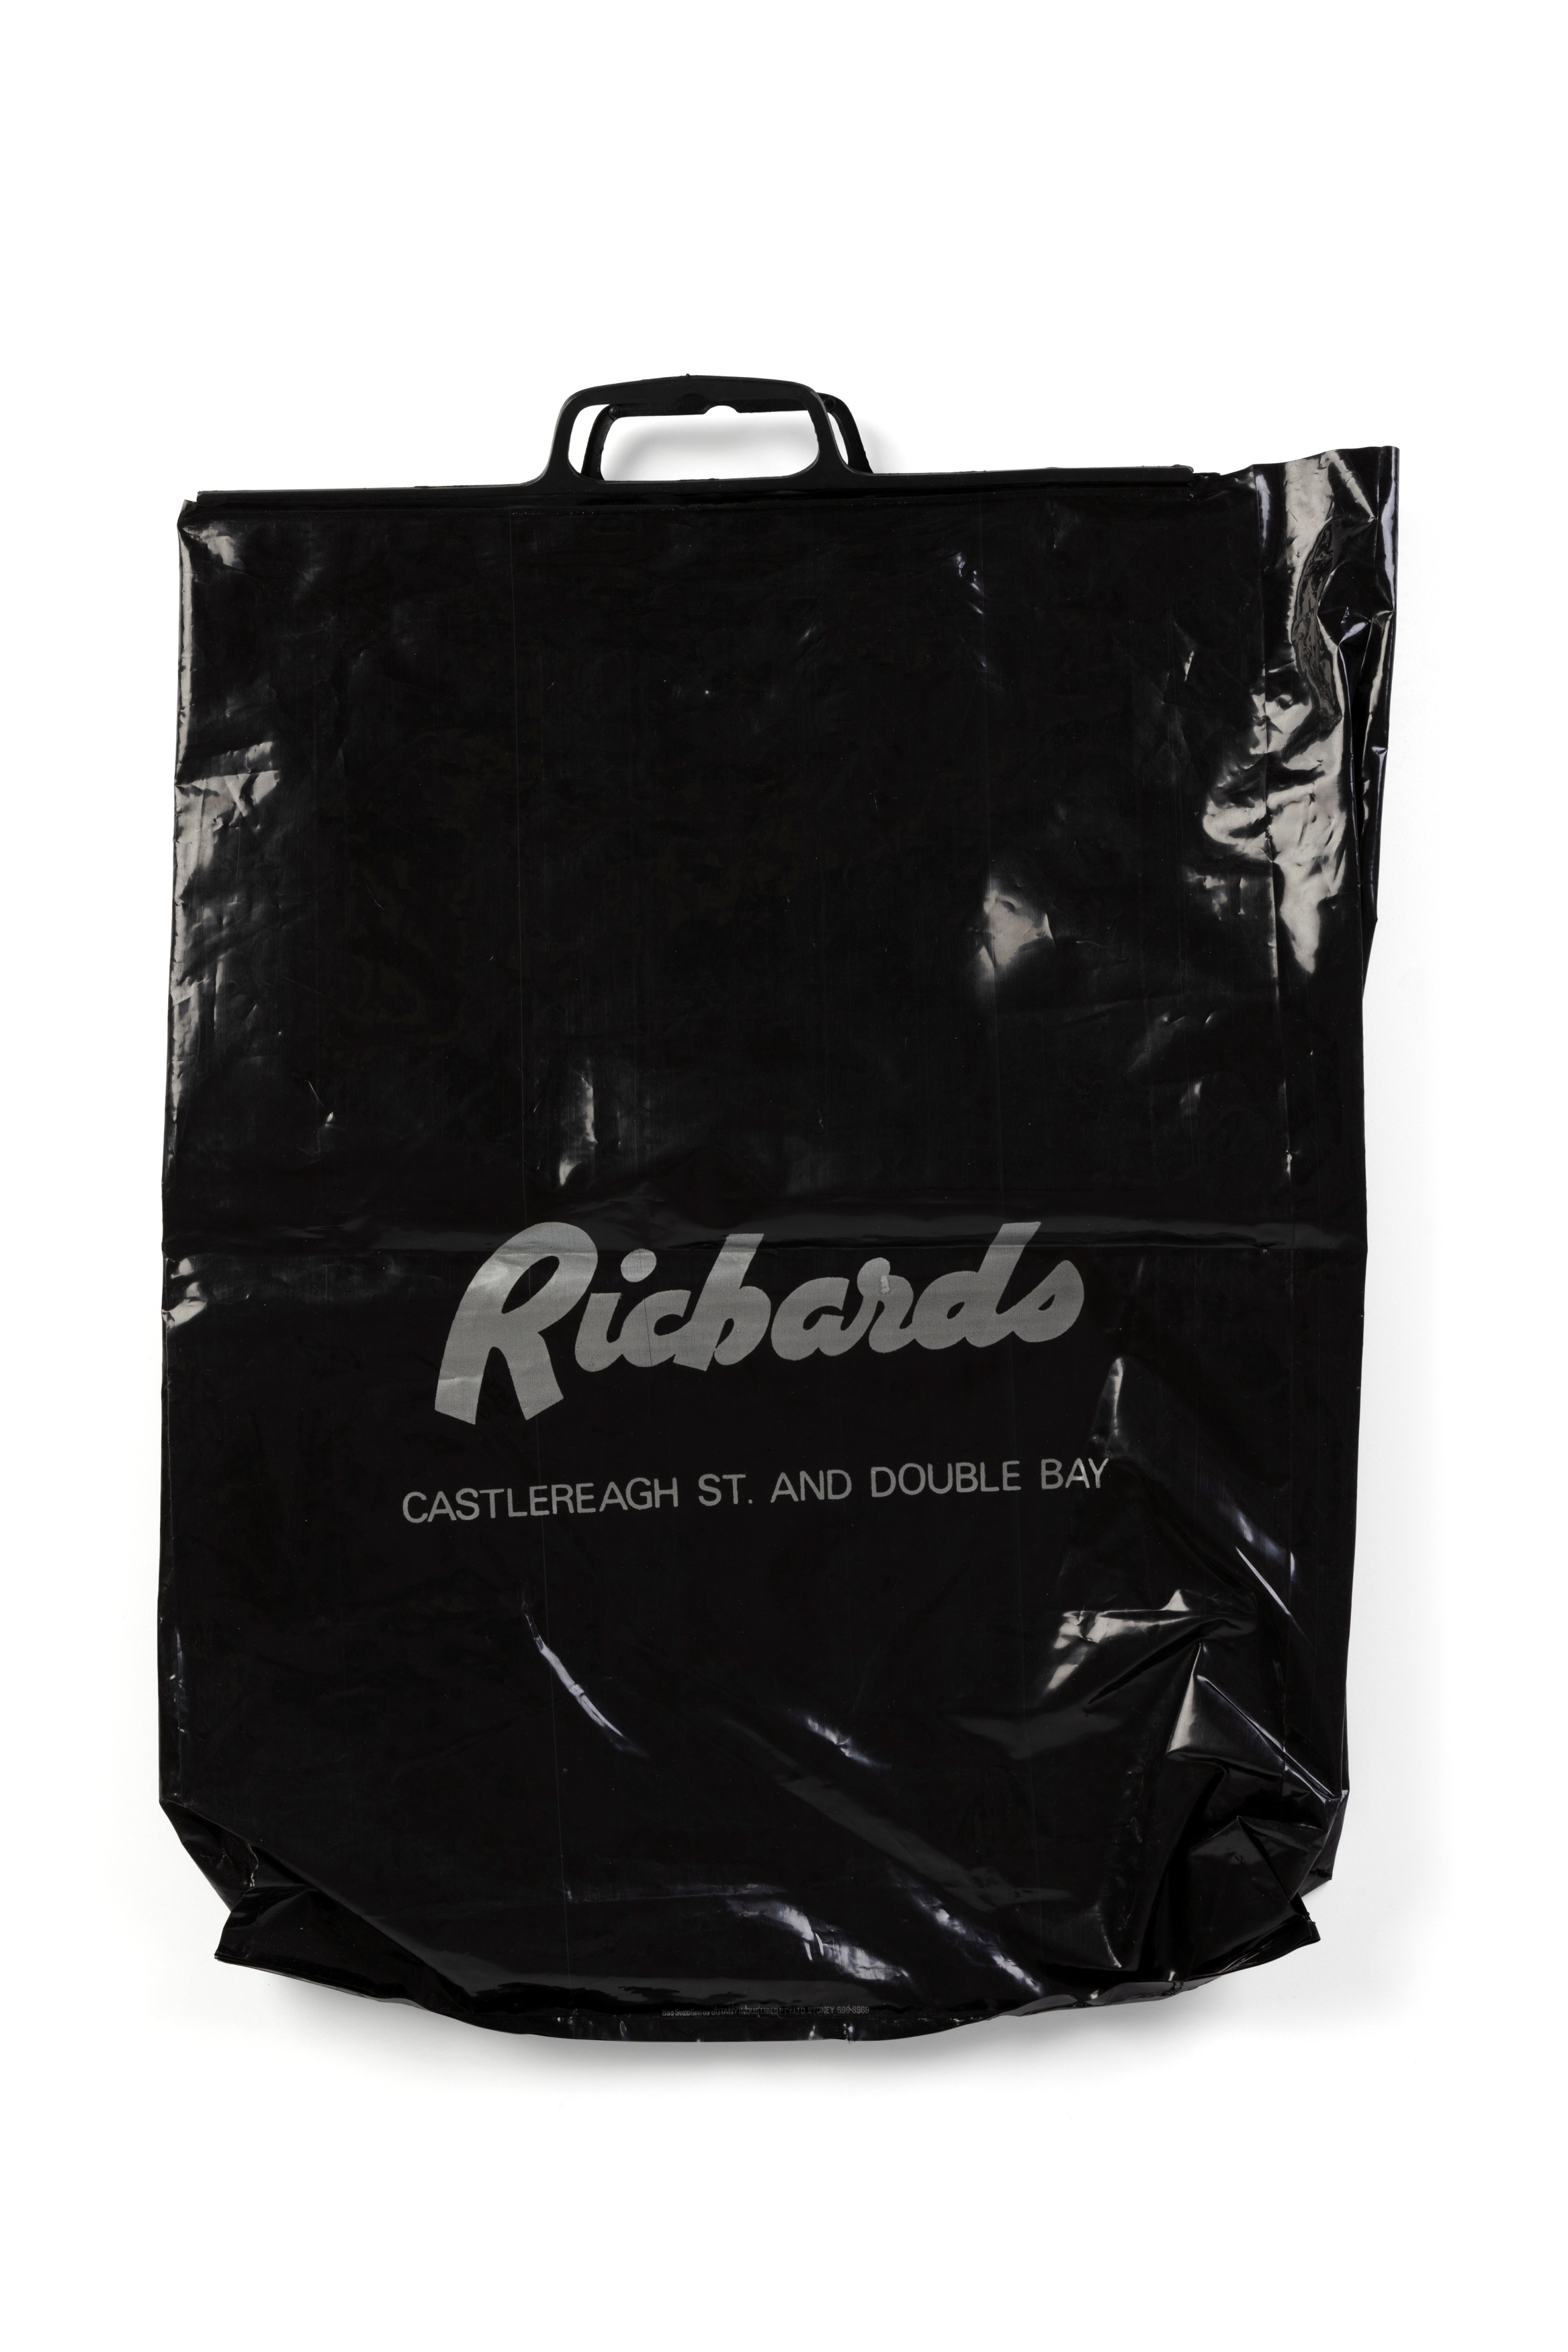 Shopping bag for Richards Clothing Shop